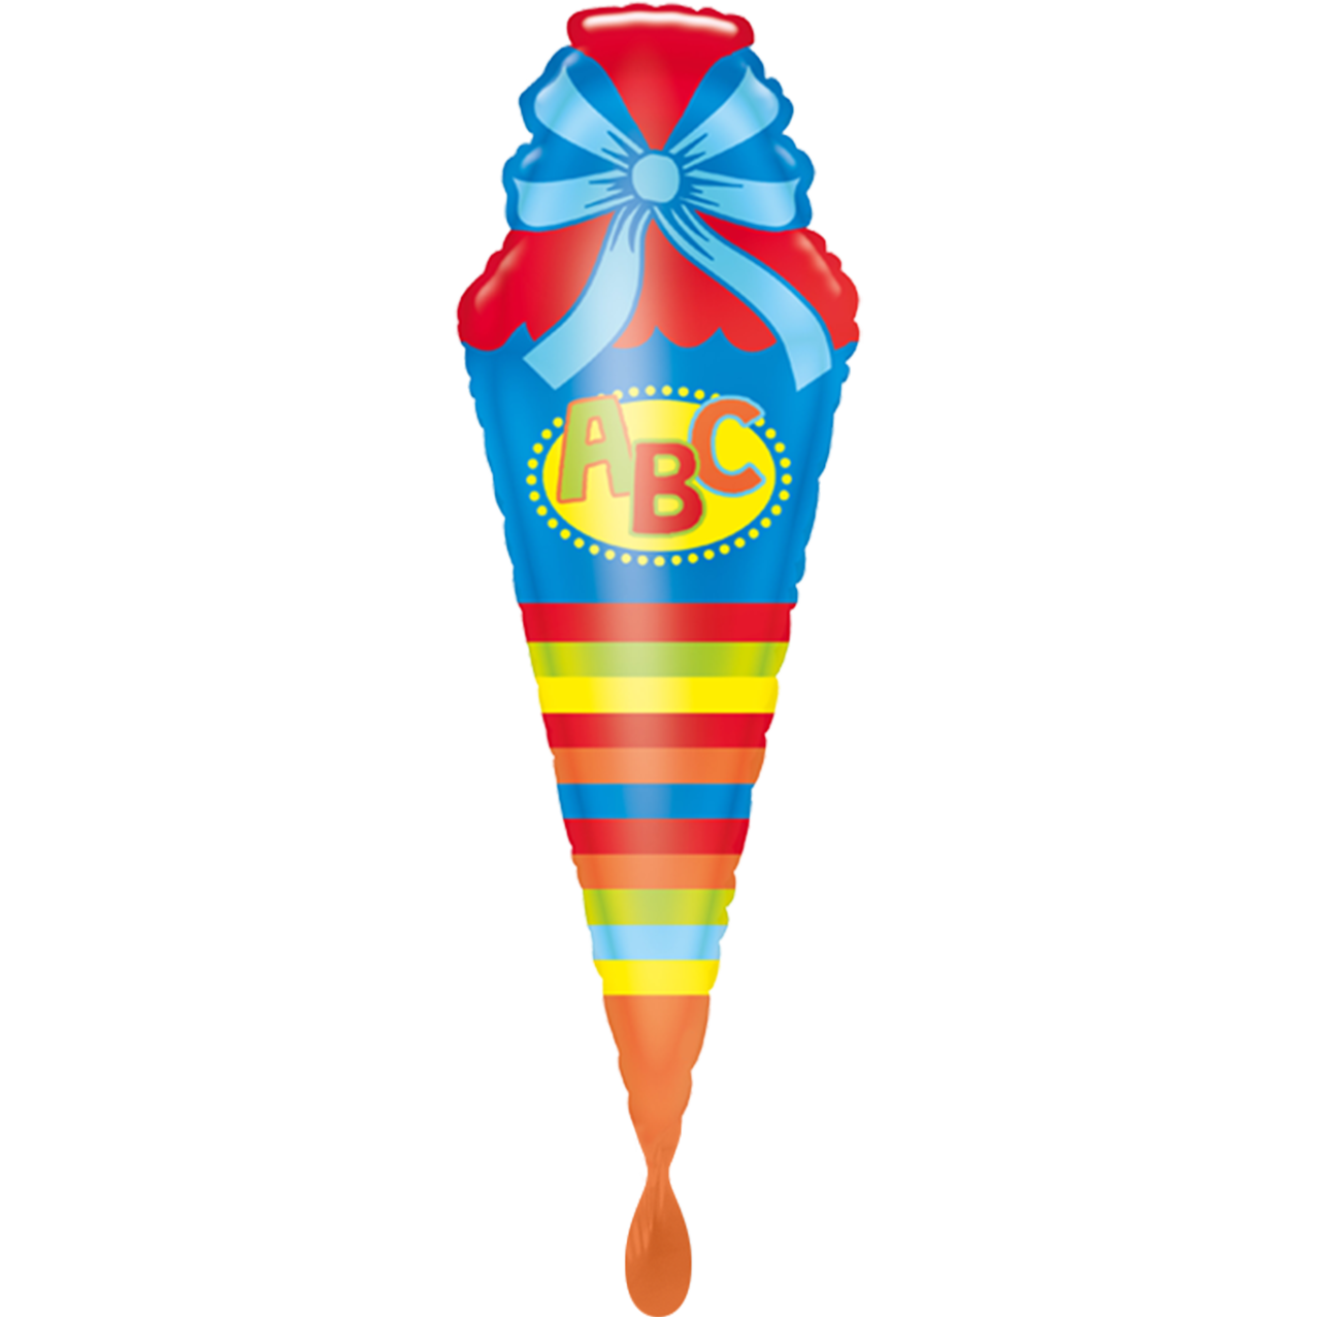 1 Balloon XXL - ABC Schultüte